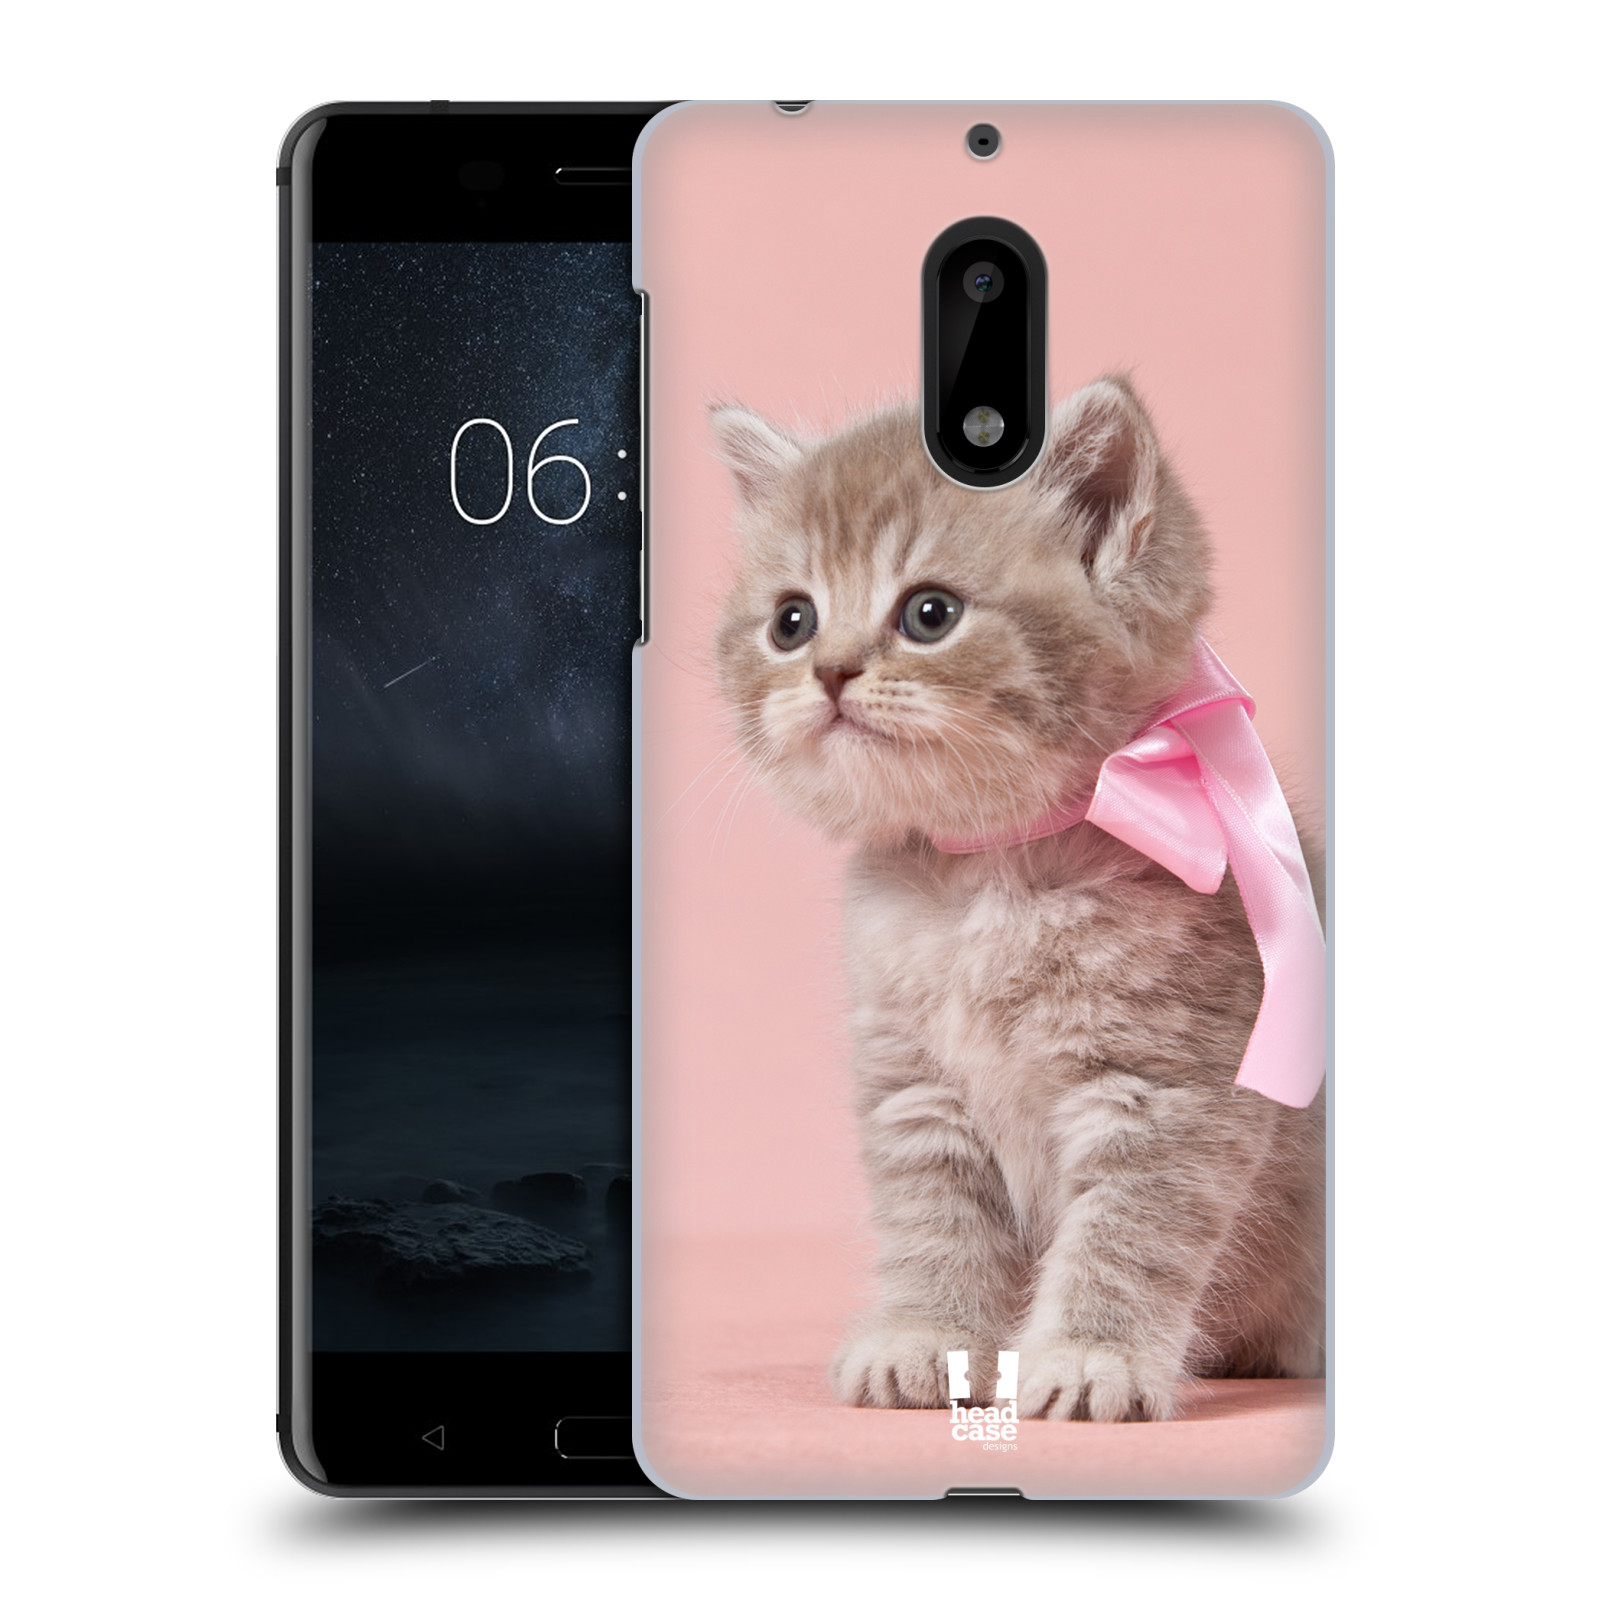 HEAD CASE plastový obal na mobil Nokia 6 vzor Kočičky koťata foto kotě s růžovou mašlí